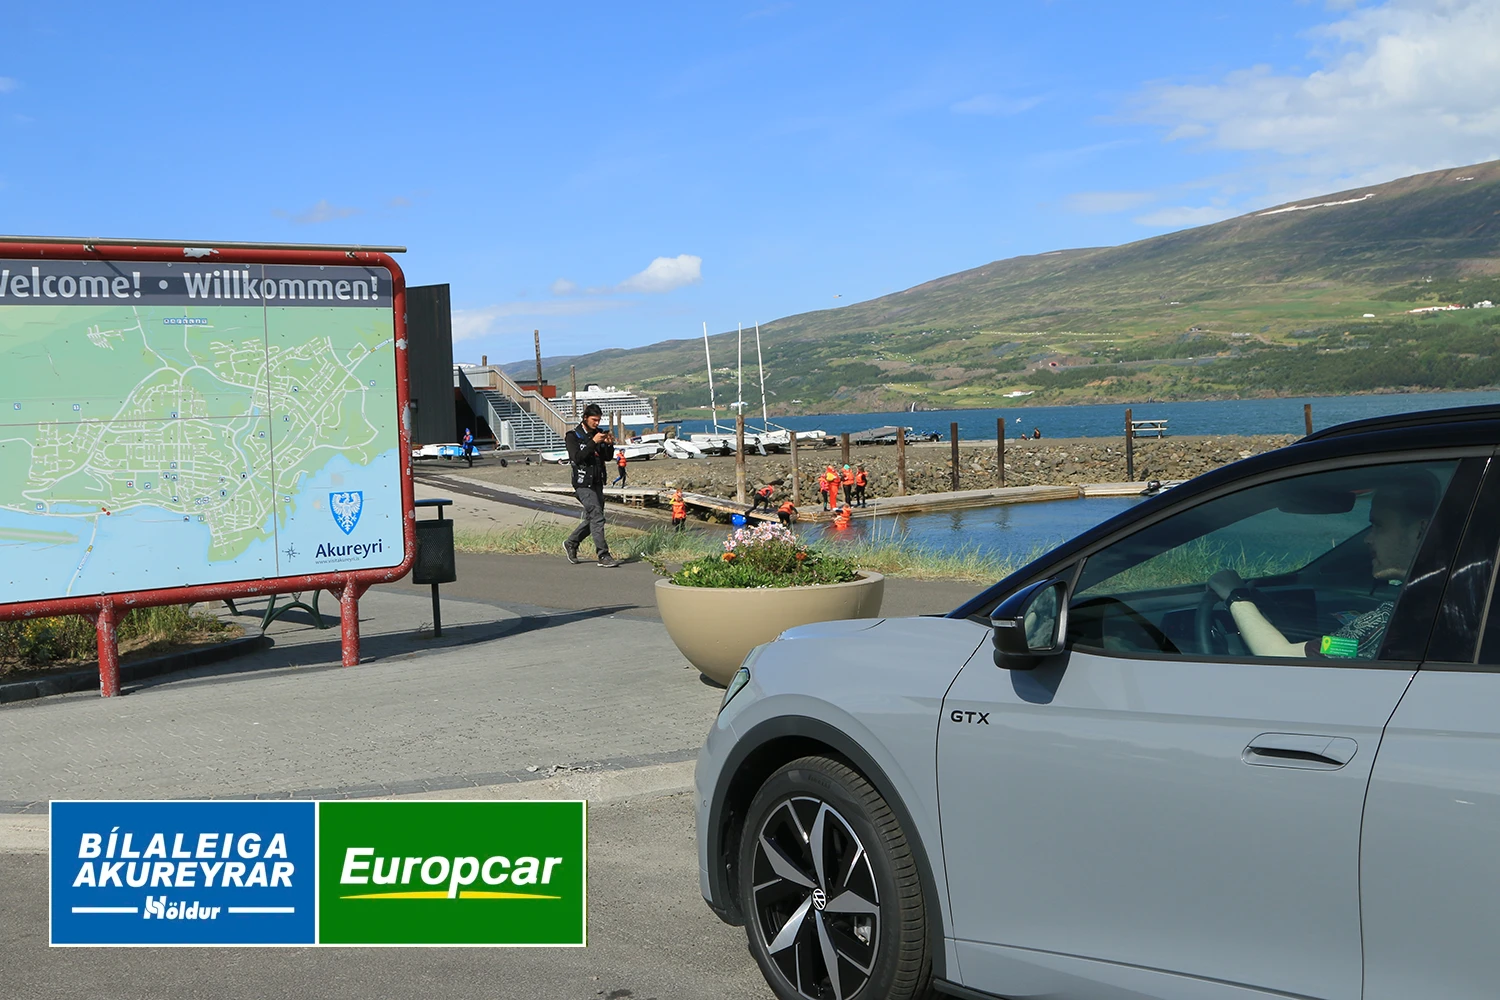 Volkswagen ID.5 from Europcar Holdur car rental in Iceland entering the town of Akureyri in th north